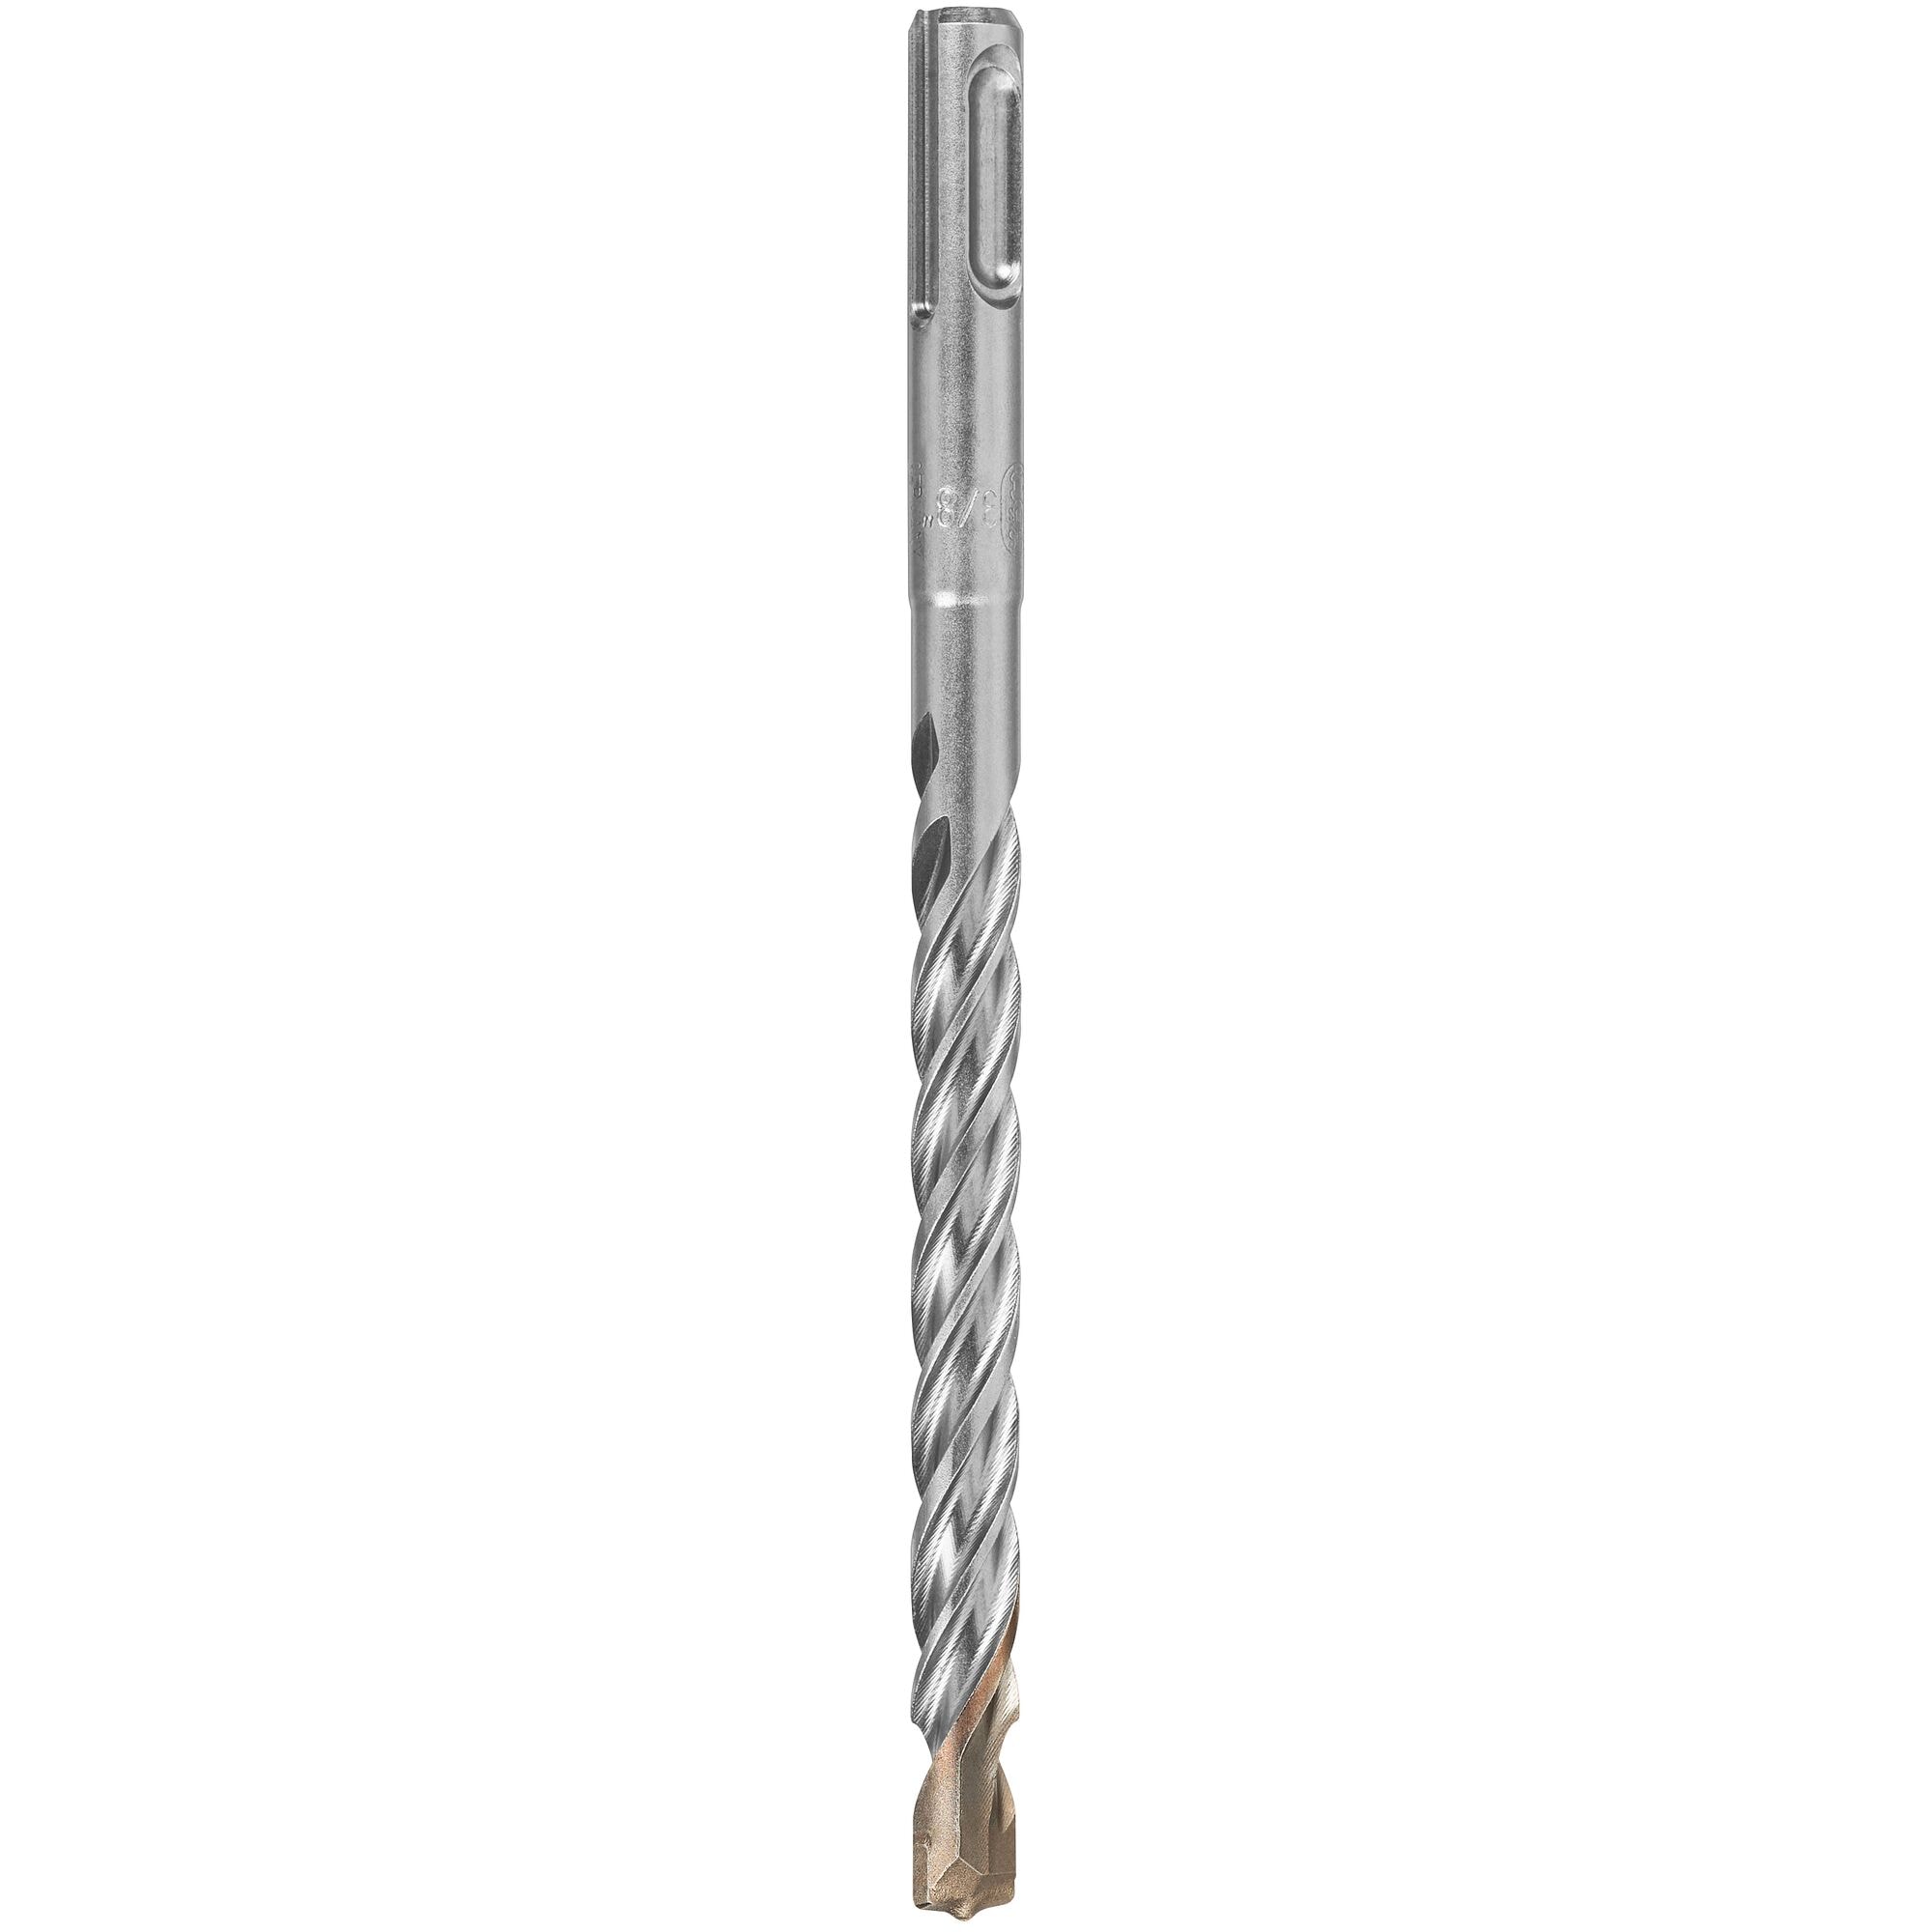 DEWALT 5/16" inch 6" Carbide SDS Plus 2 Cutter Masonry Drill Bits Rotary Hammer